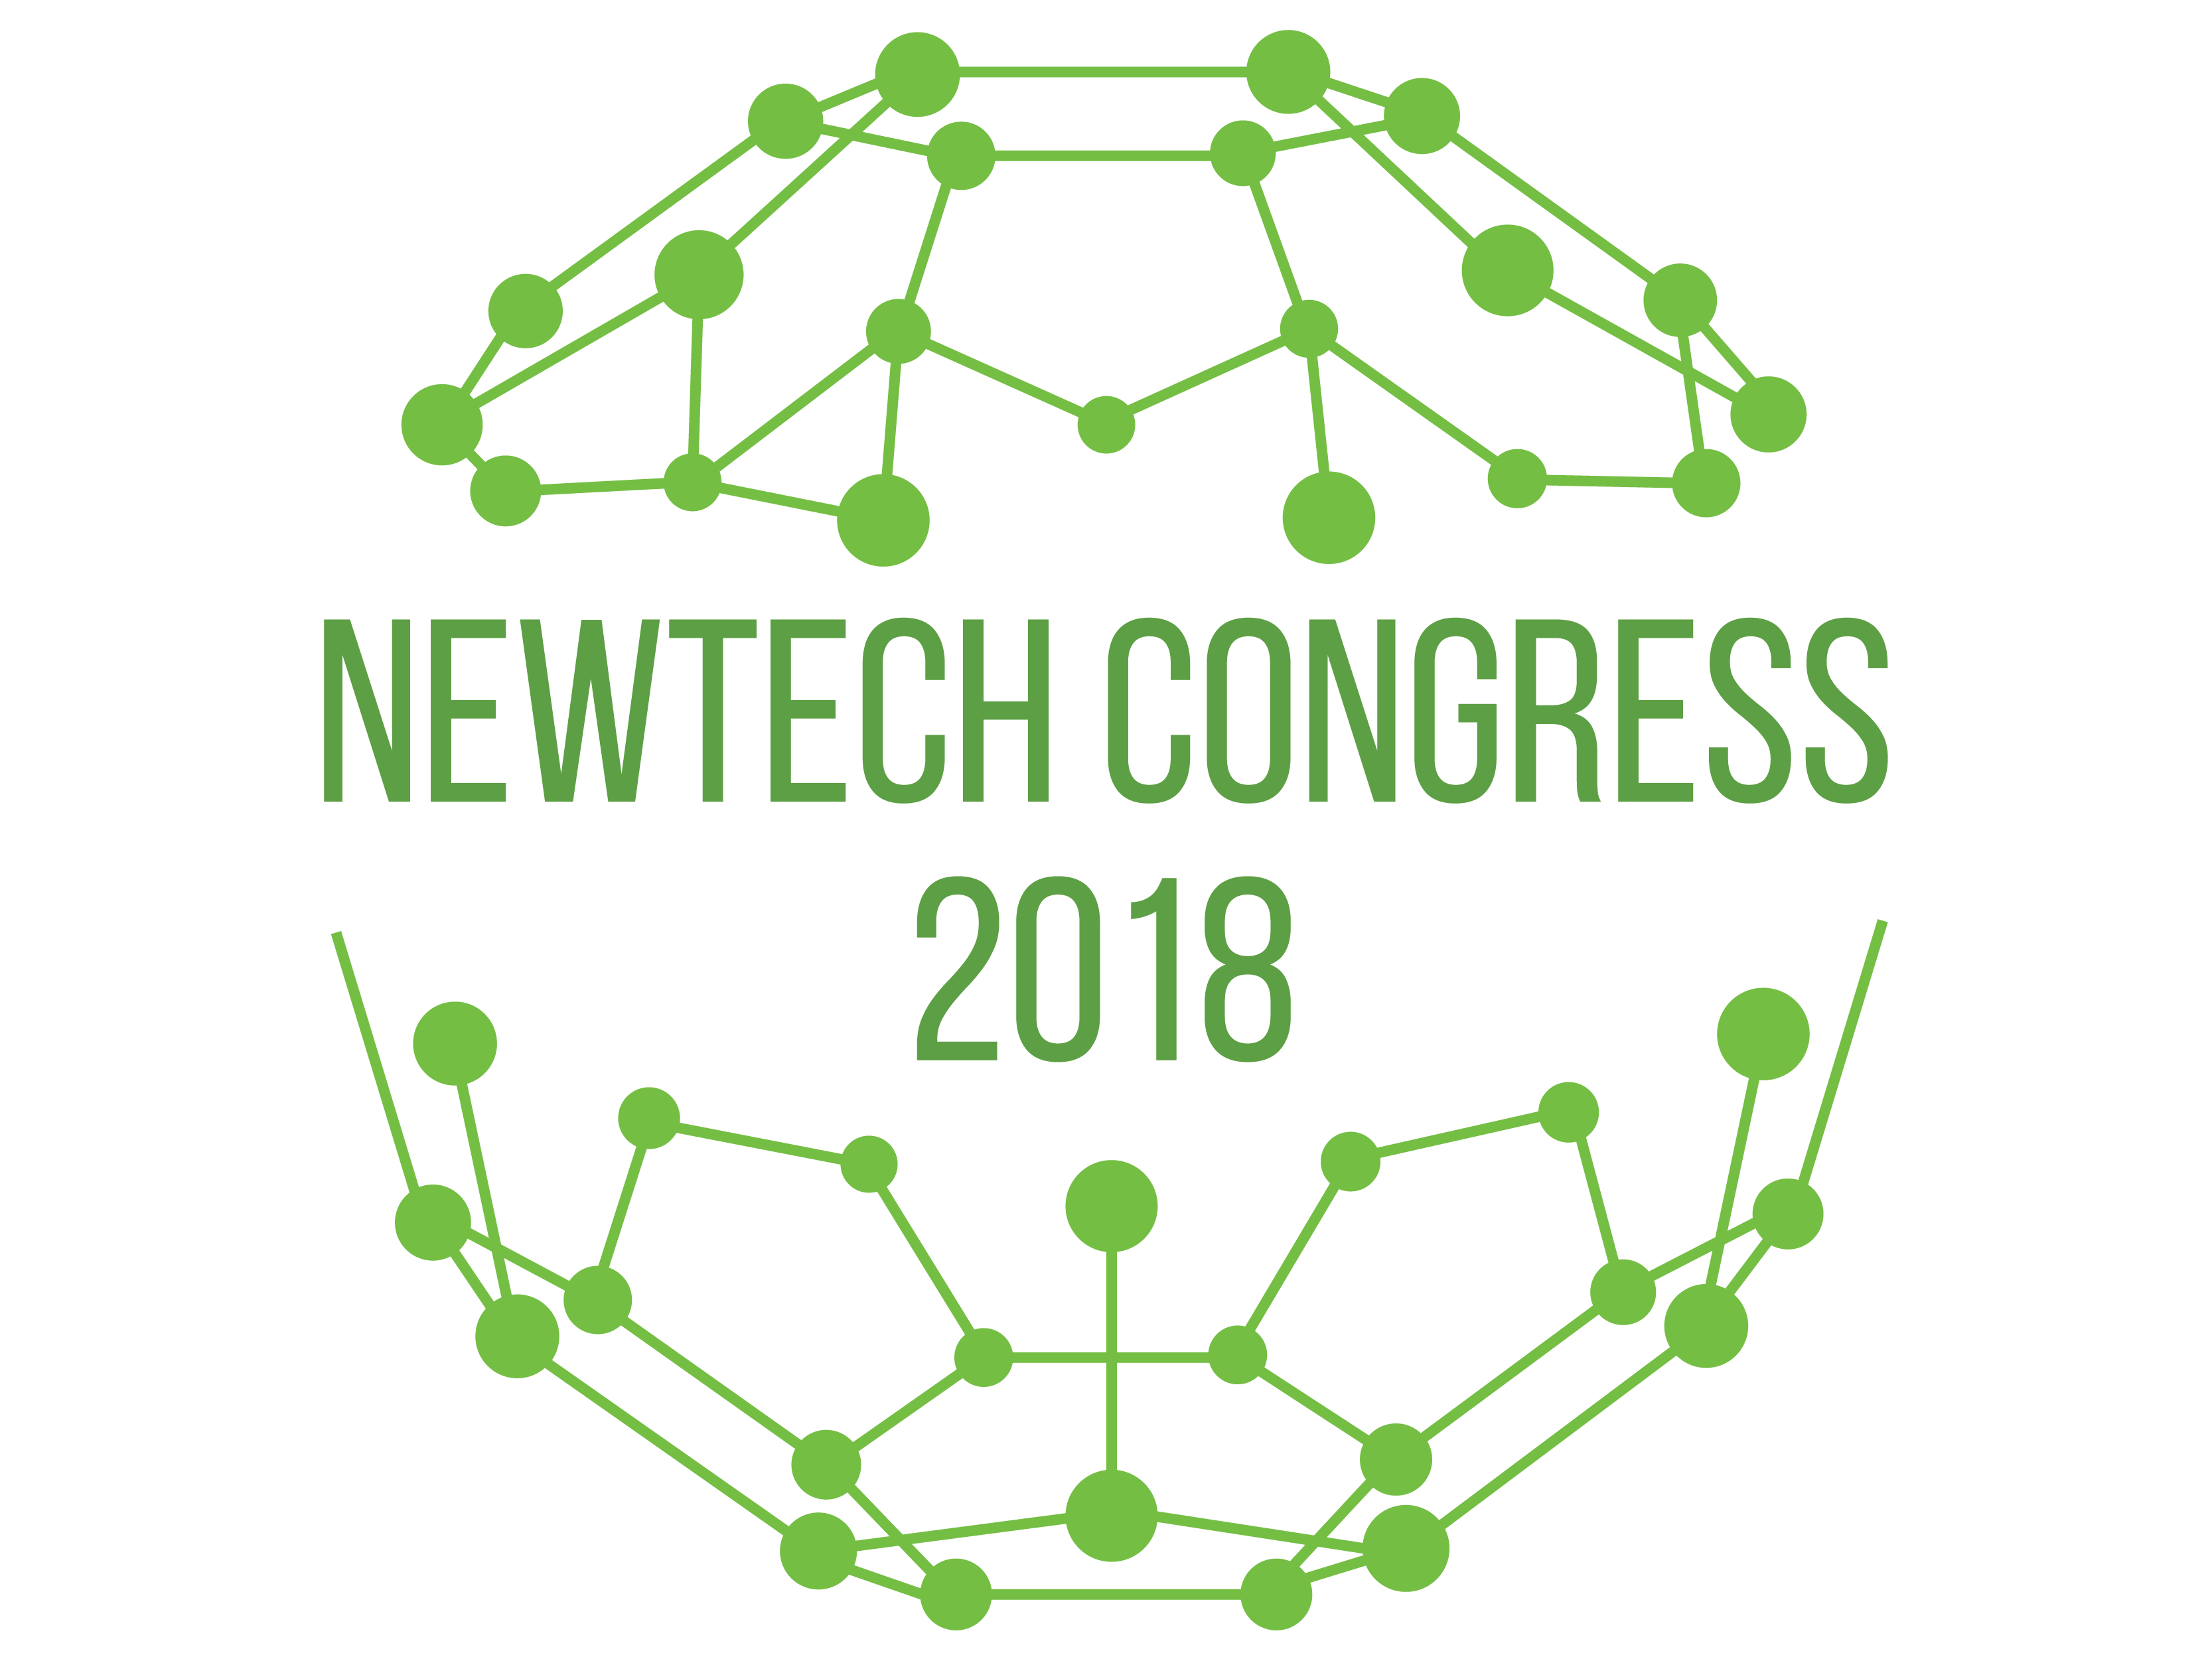 4th World Congress on New Technologies (NewTech'18), Madrid, Spain, August 19 - 21, 2018